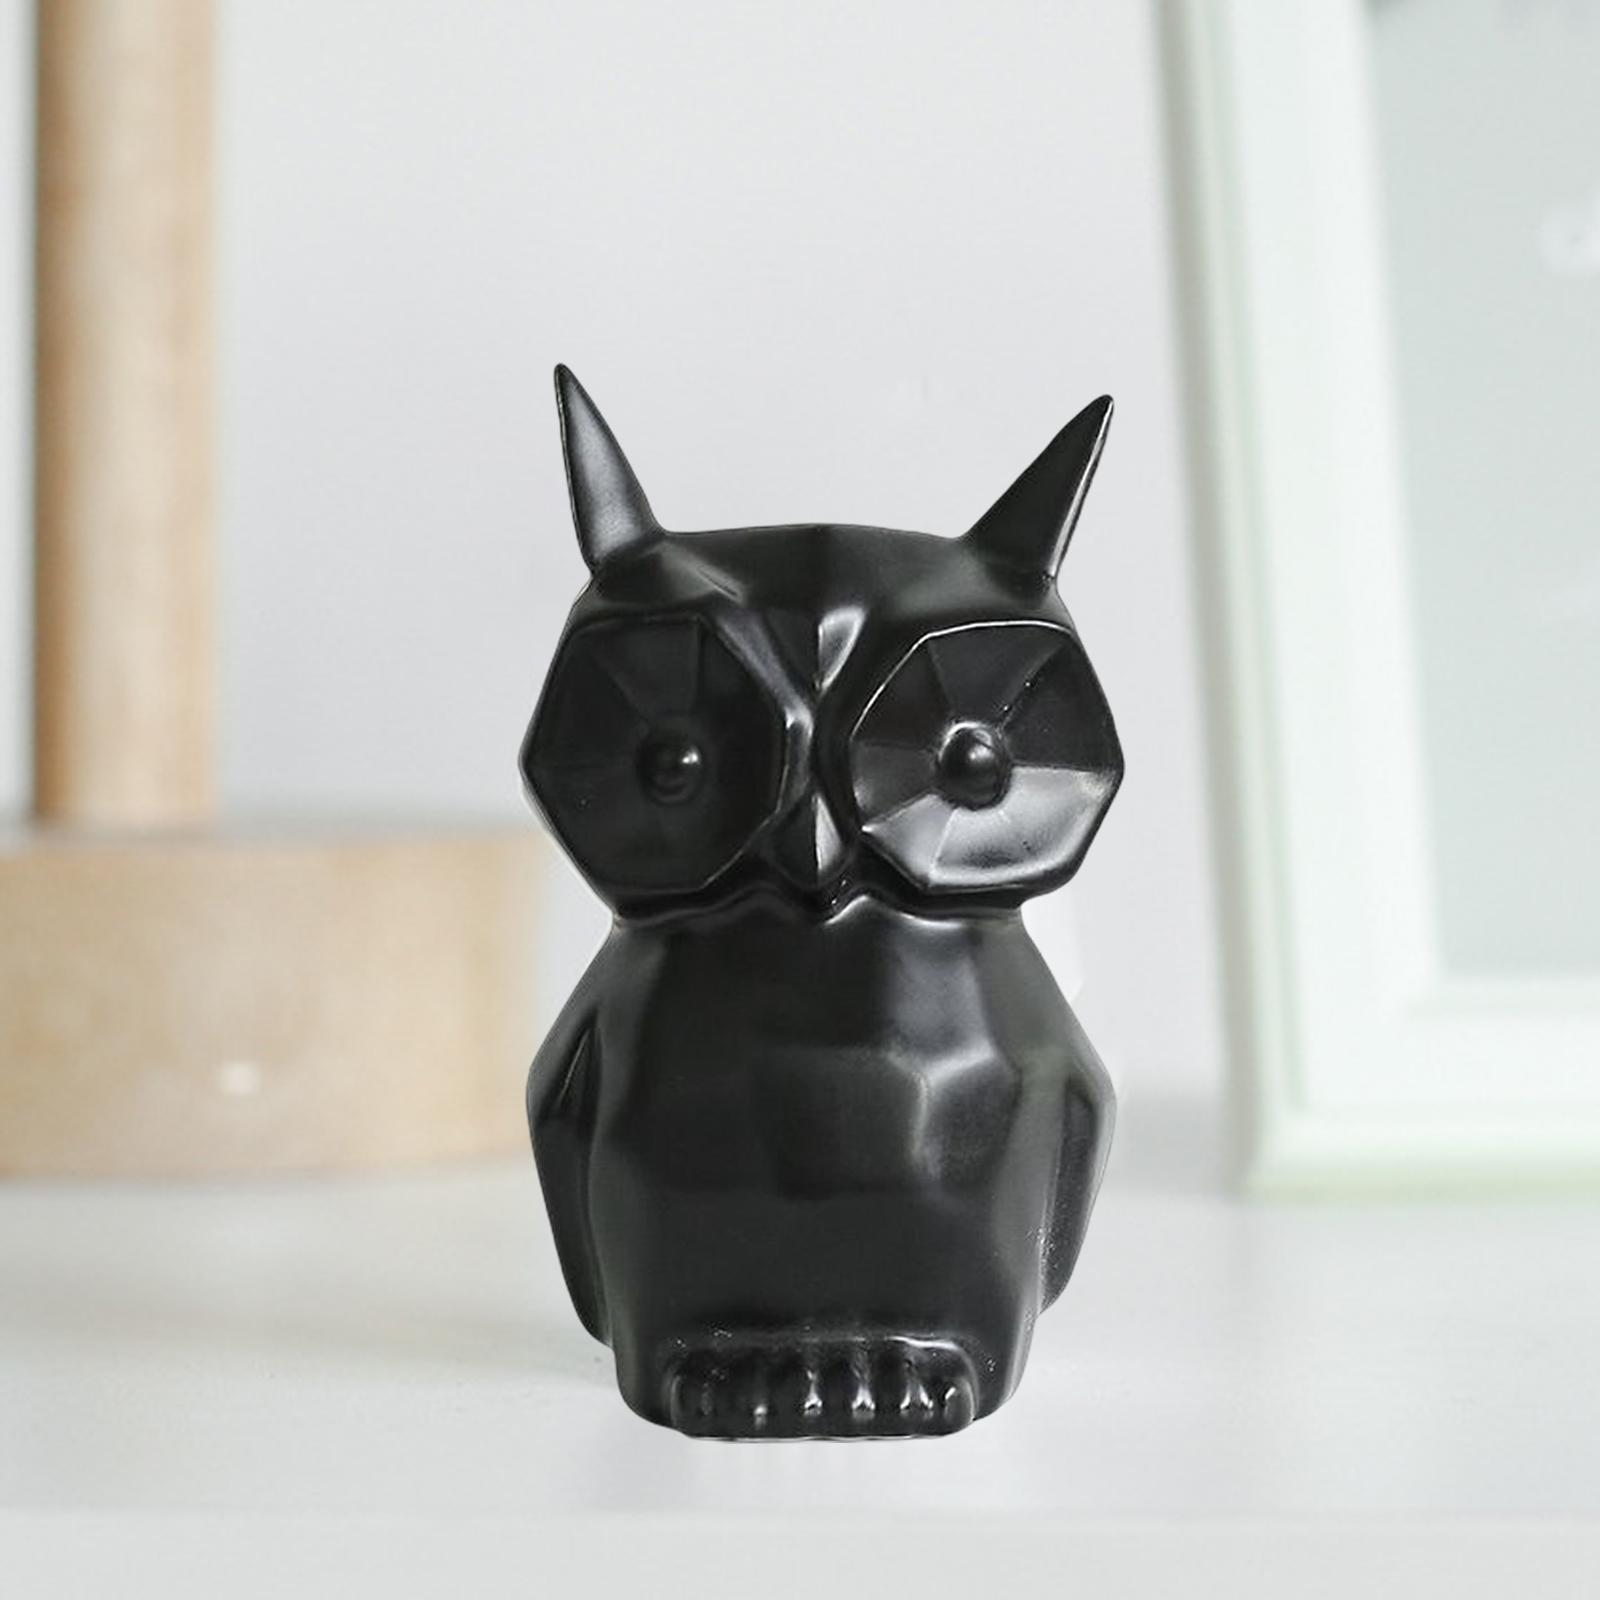 Birds Figurines Sculptures Home Decor Ceramic Owl Statues Black 5.5x5x9cm